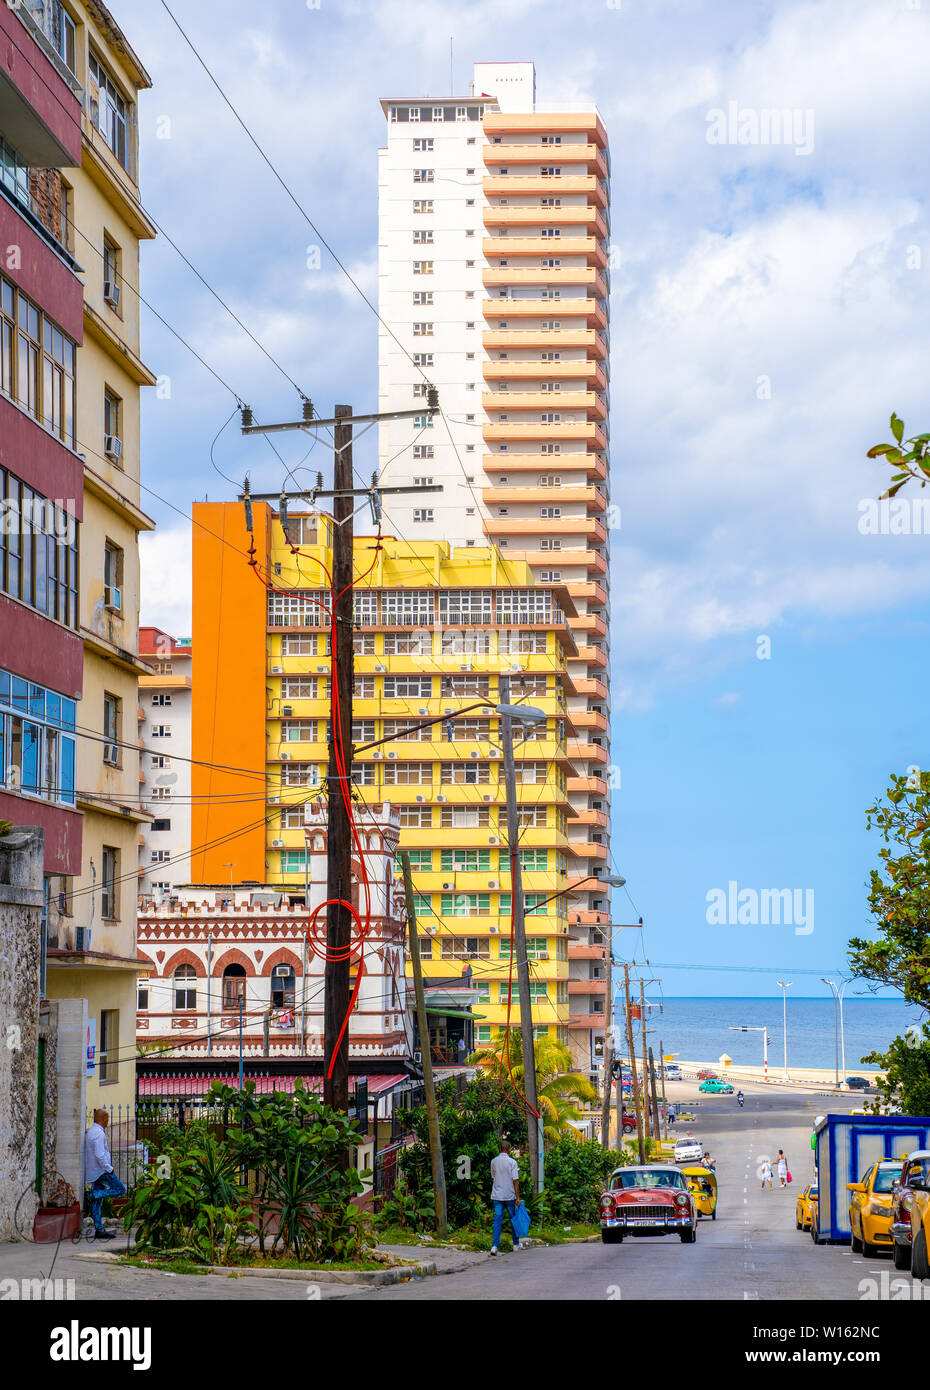 Colorful Buildings in Havana Cuba. Stock Photo